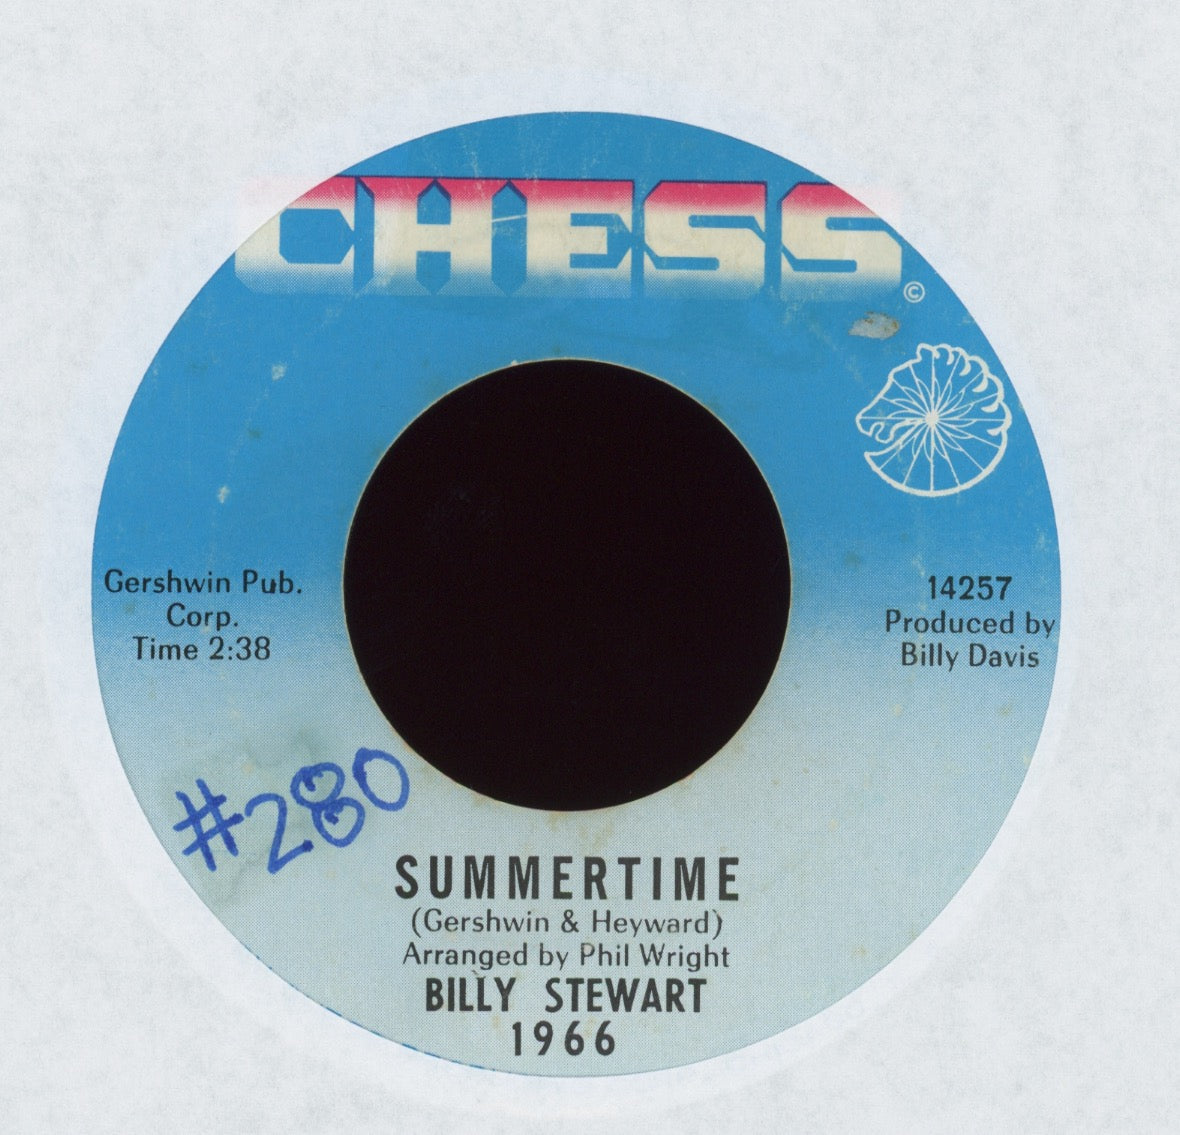 Billy Stewart - Summertime on Chess